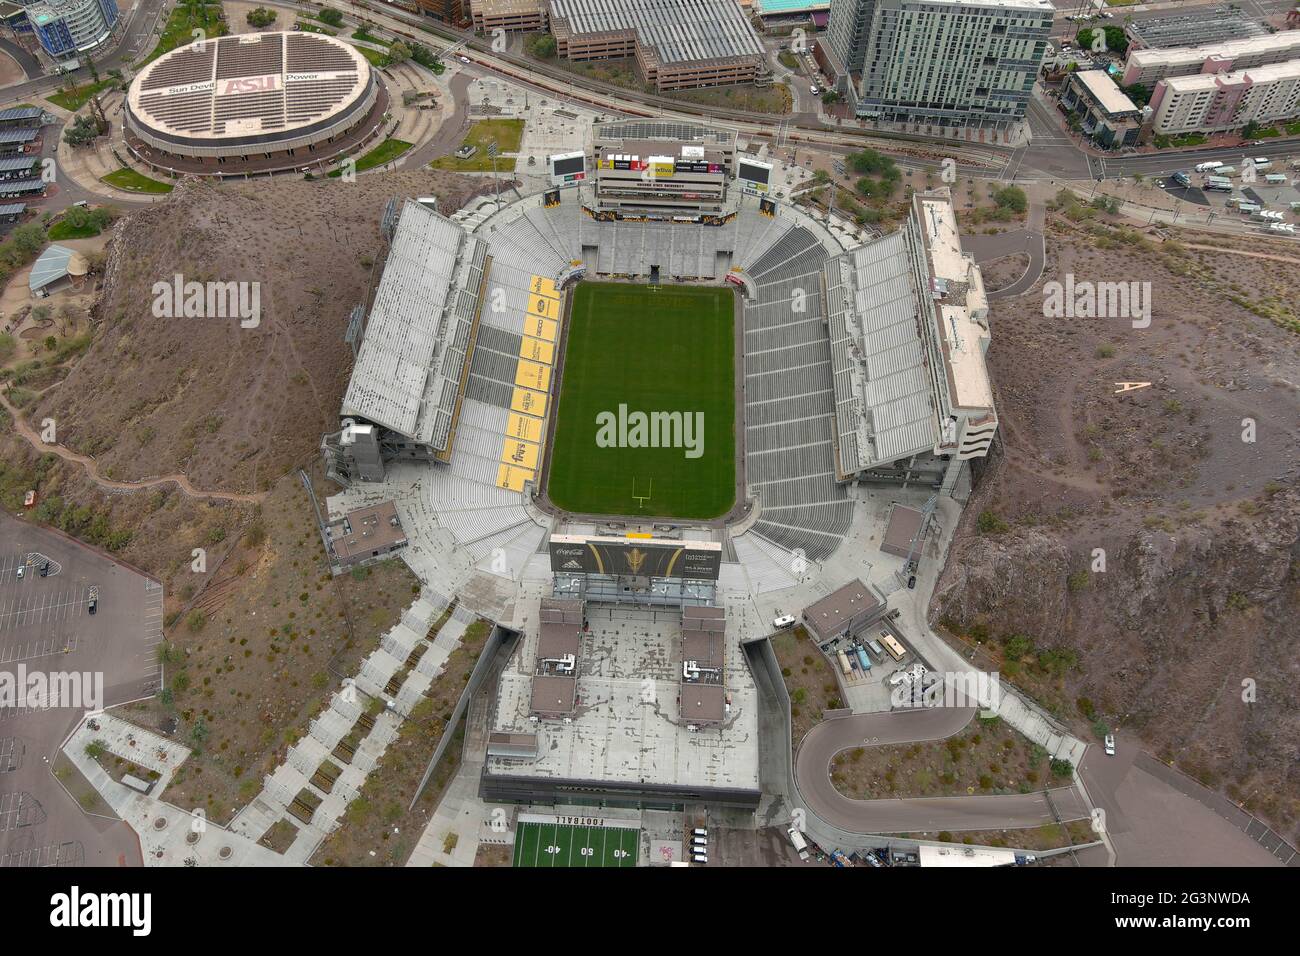 File:2021 Sun Devil Stadium 1.jpg - Wikimedia Commons